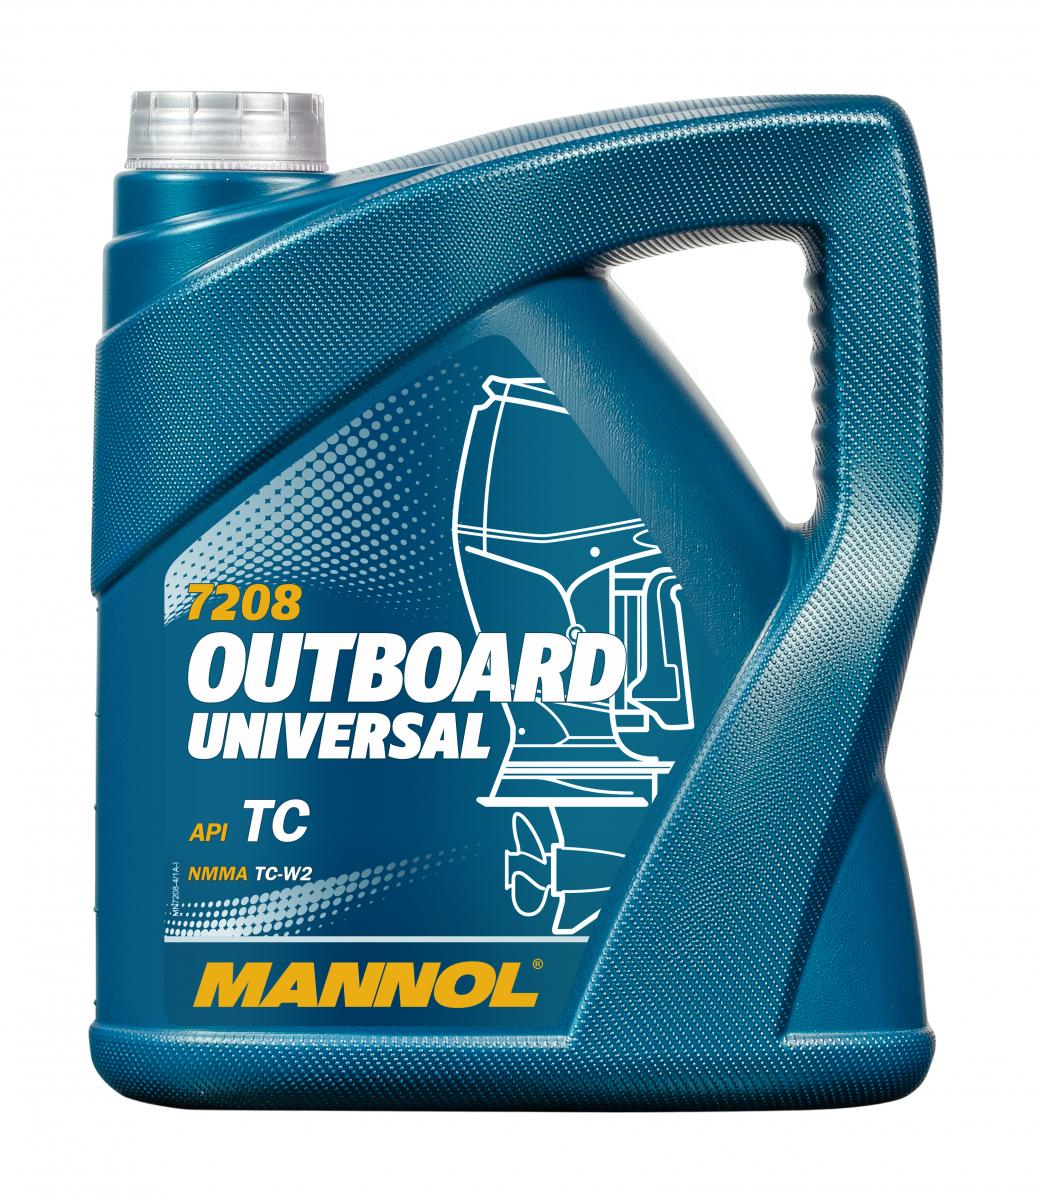 4 Liter MANNOL Outboard Universal API TC Motoröl Außenbordmotoröl